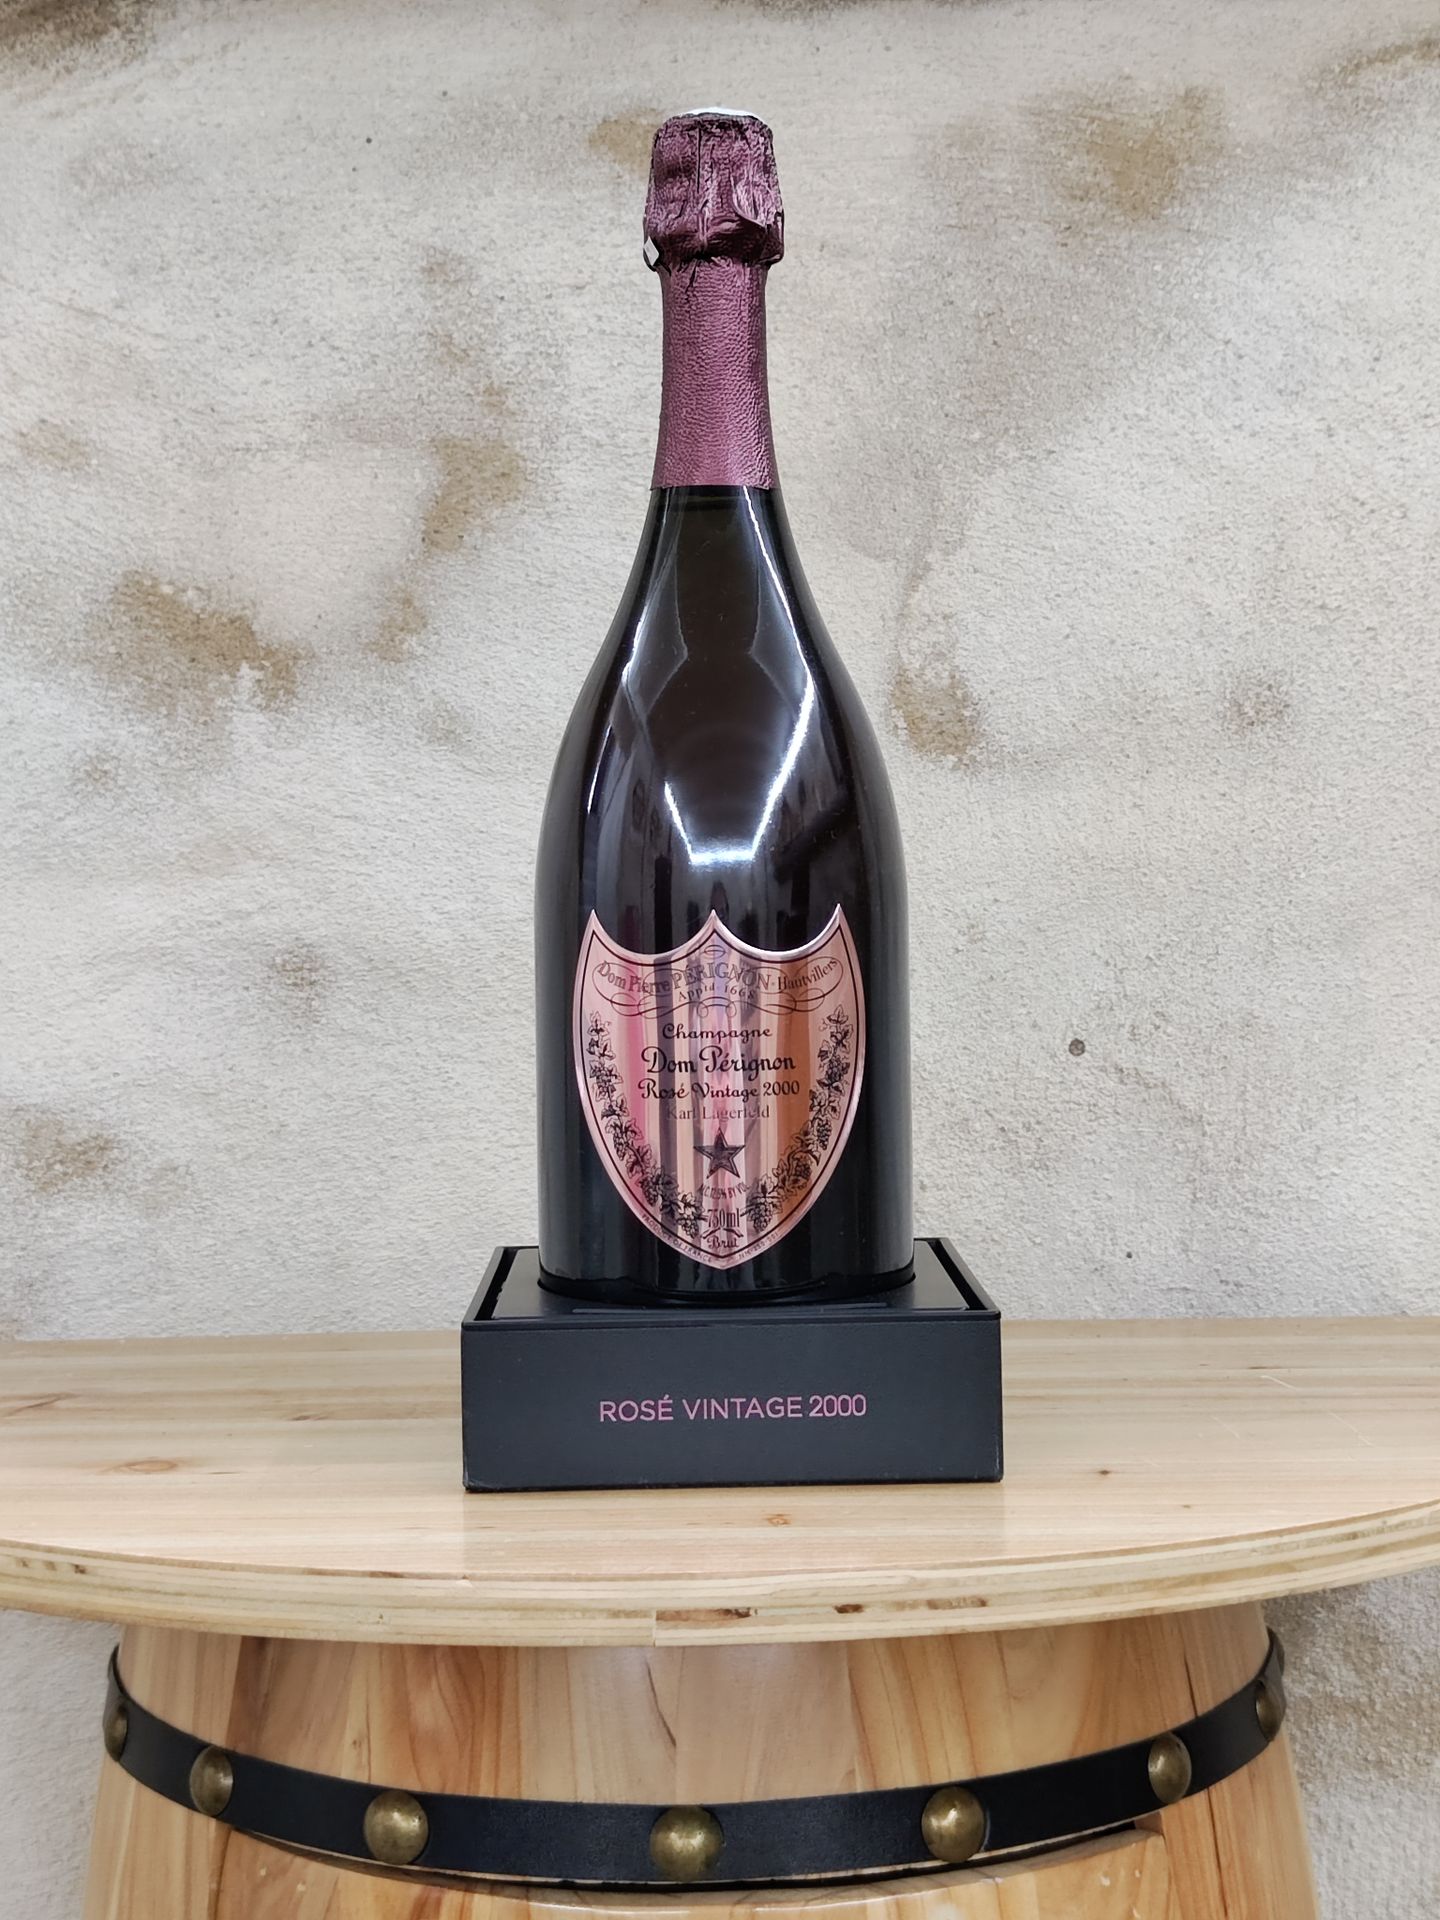 Null 1 瓶 DOM PERIGNON 桃红香槟，2000 年份。限量版。
包装盒和纸板。